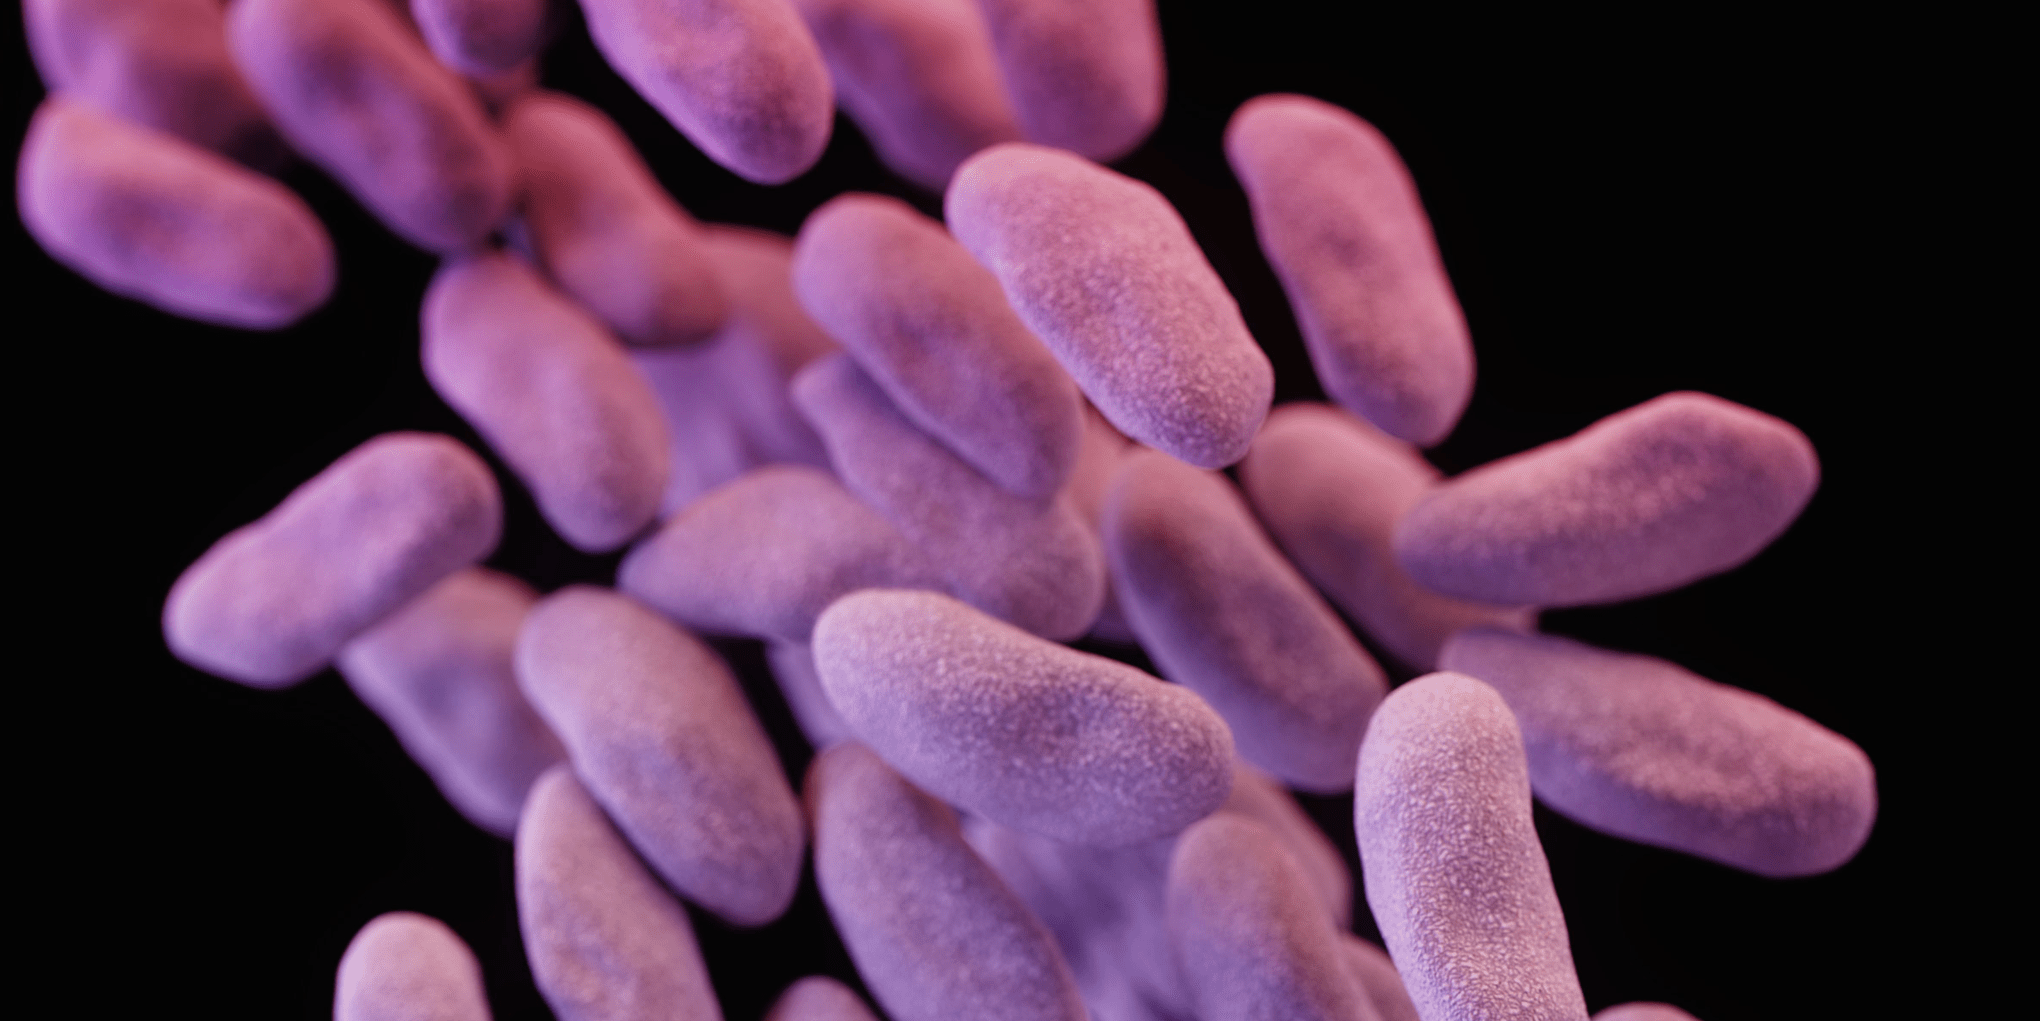 ‘Nightmare bacteria’ spreading in Denmark